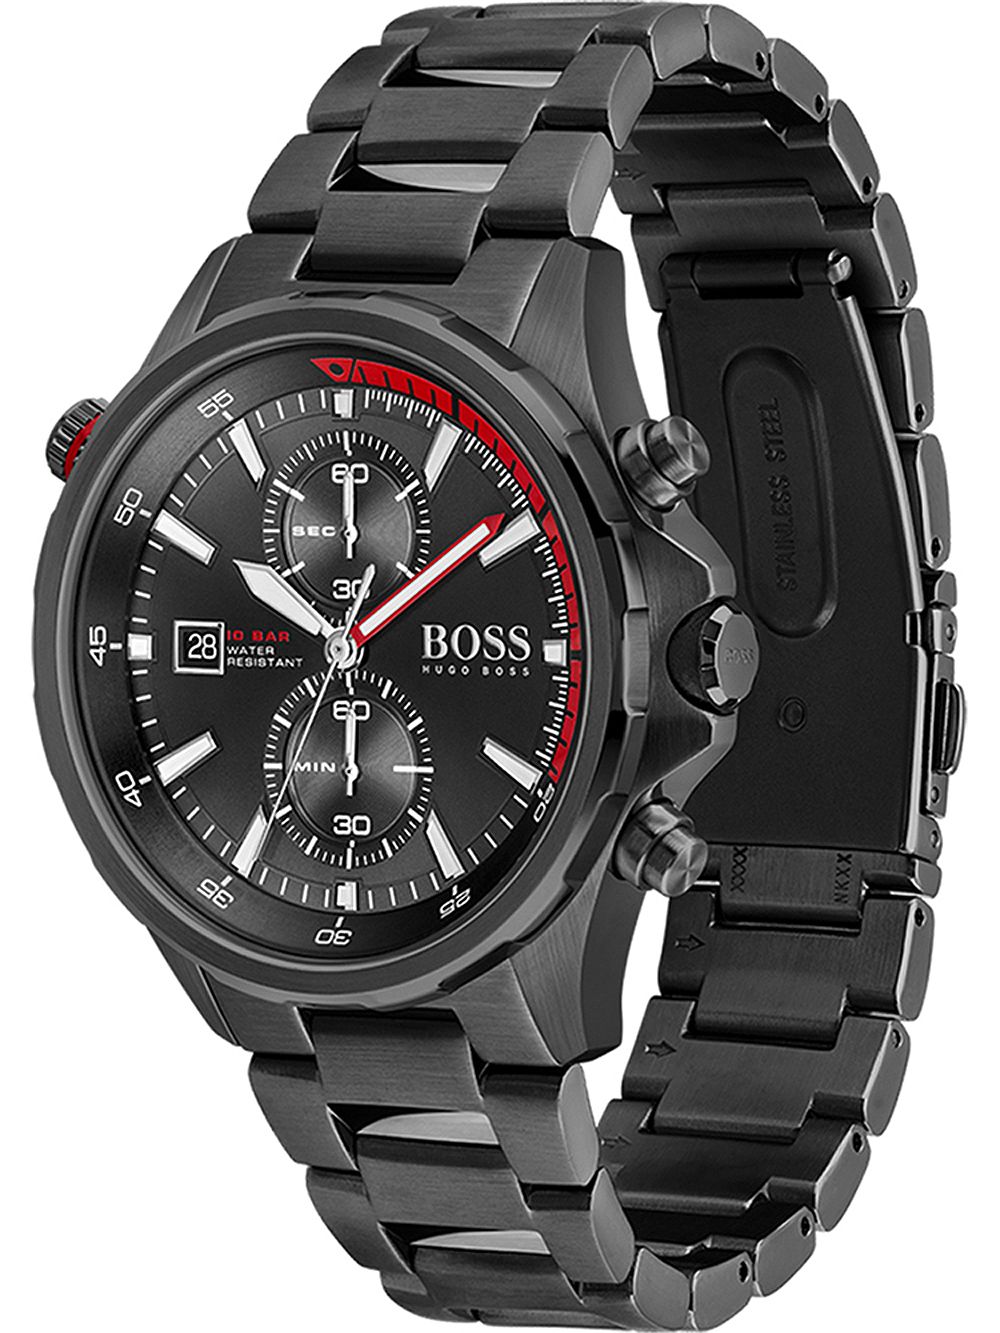 Hugo Boss Globetrotter Black Chronograph Men's Watch 1513825 - Big Daddy Watches #2